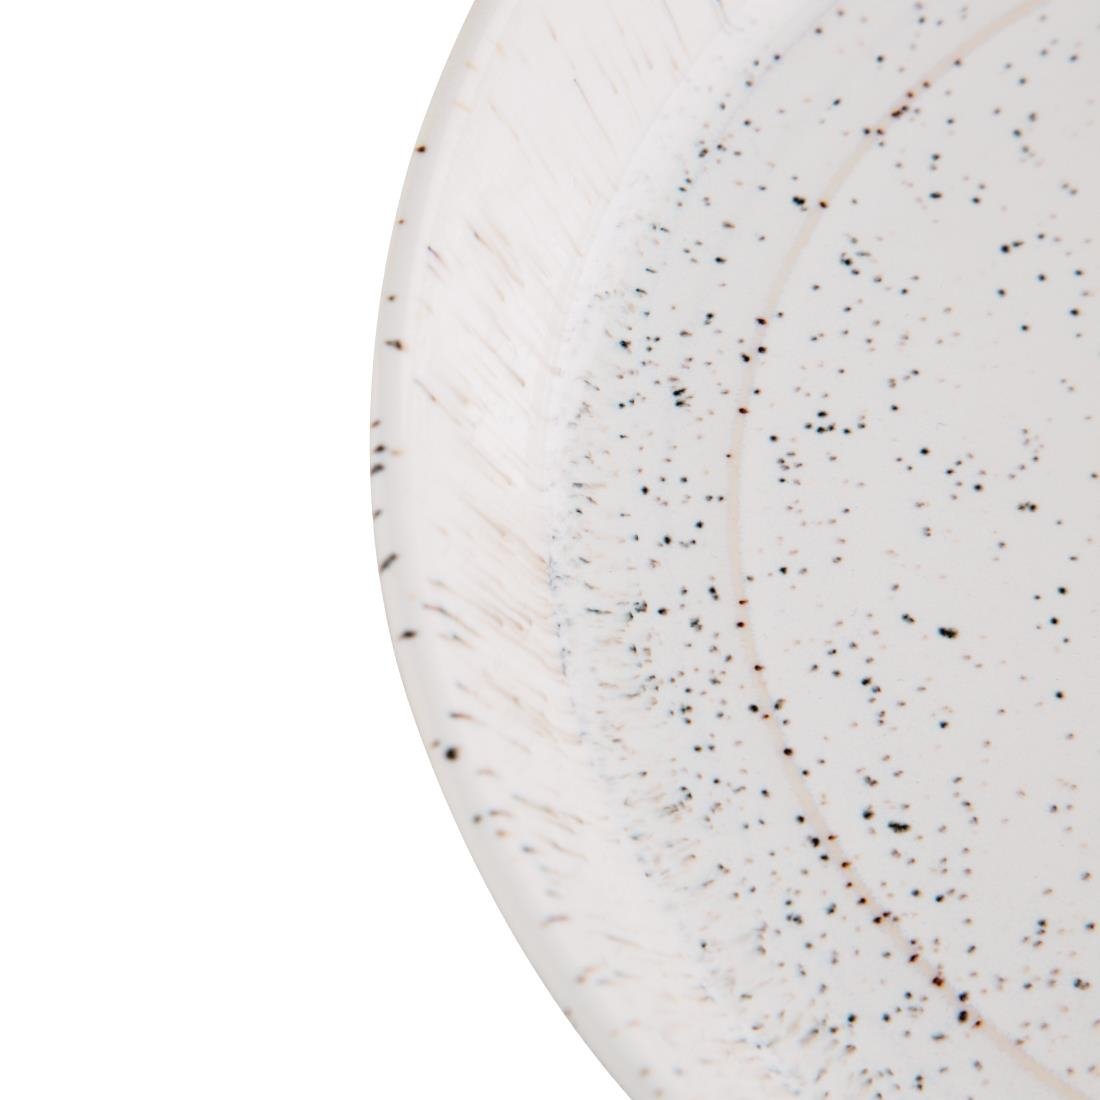 Olympia Cavolo Flache runde Schale weiß gesprenkelt 220mm (4 Stück)